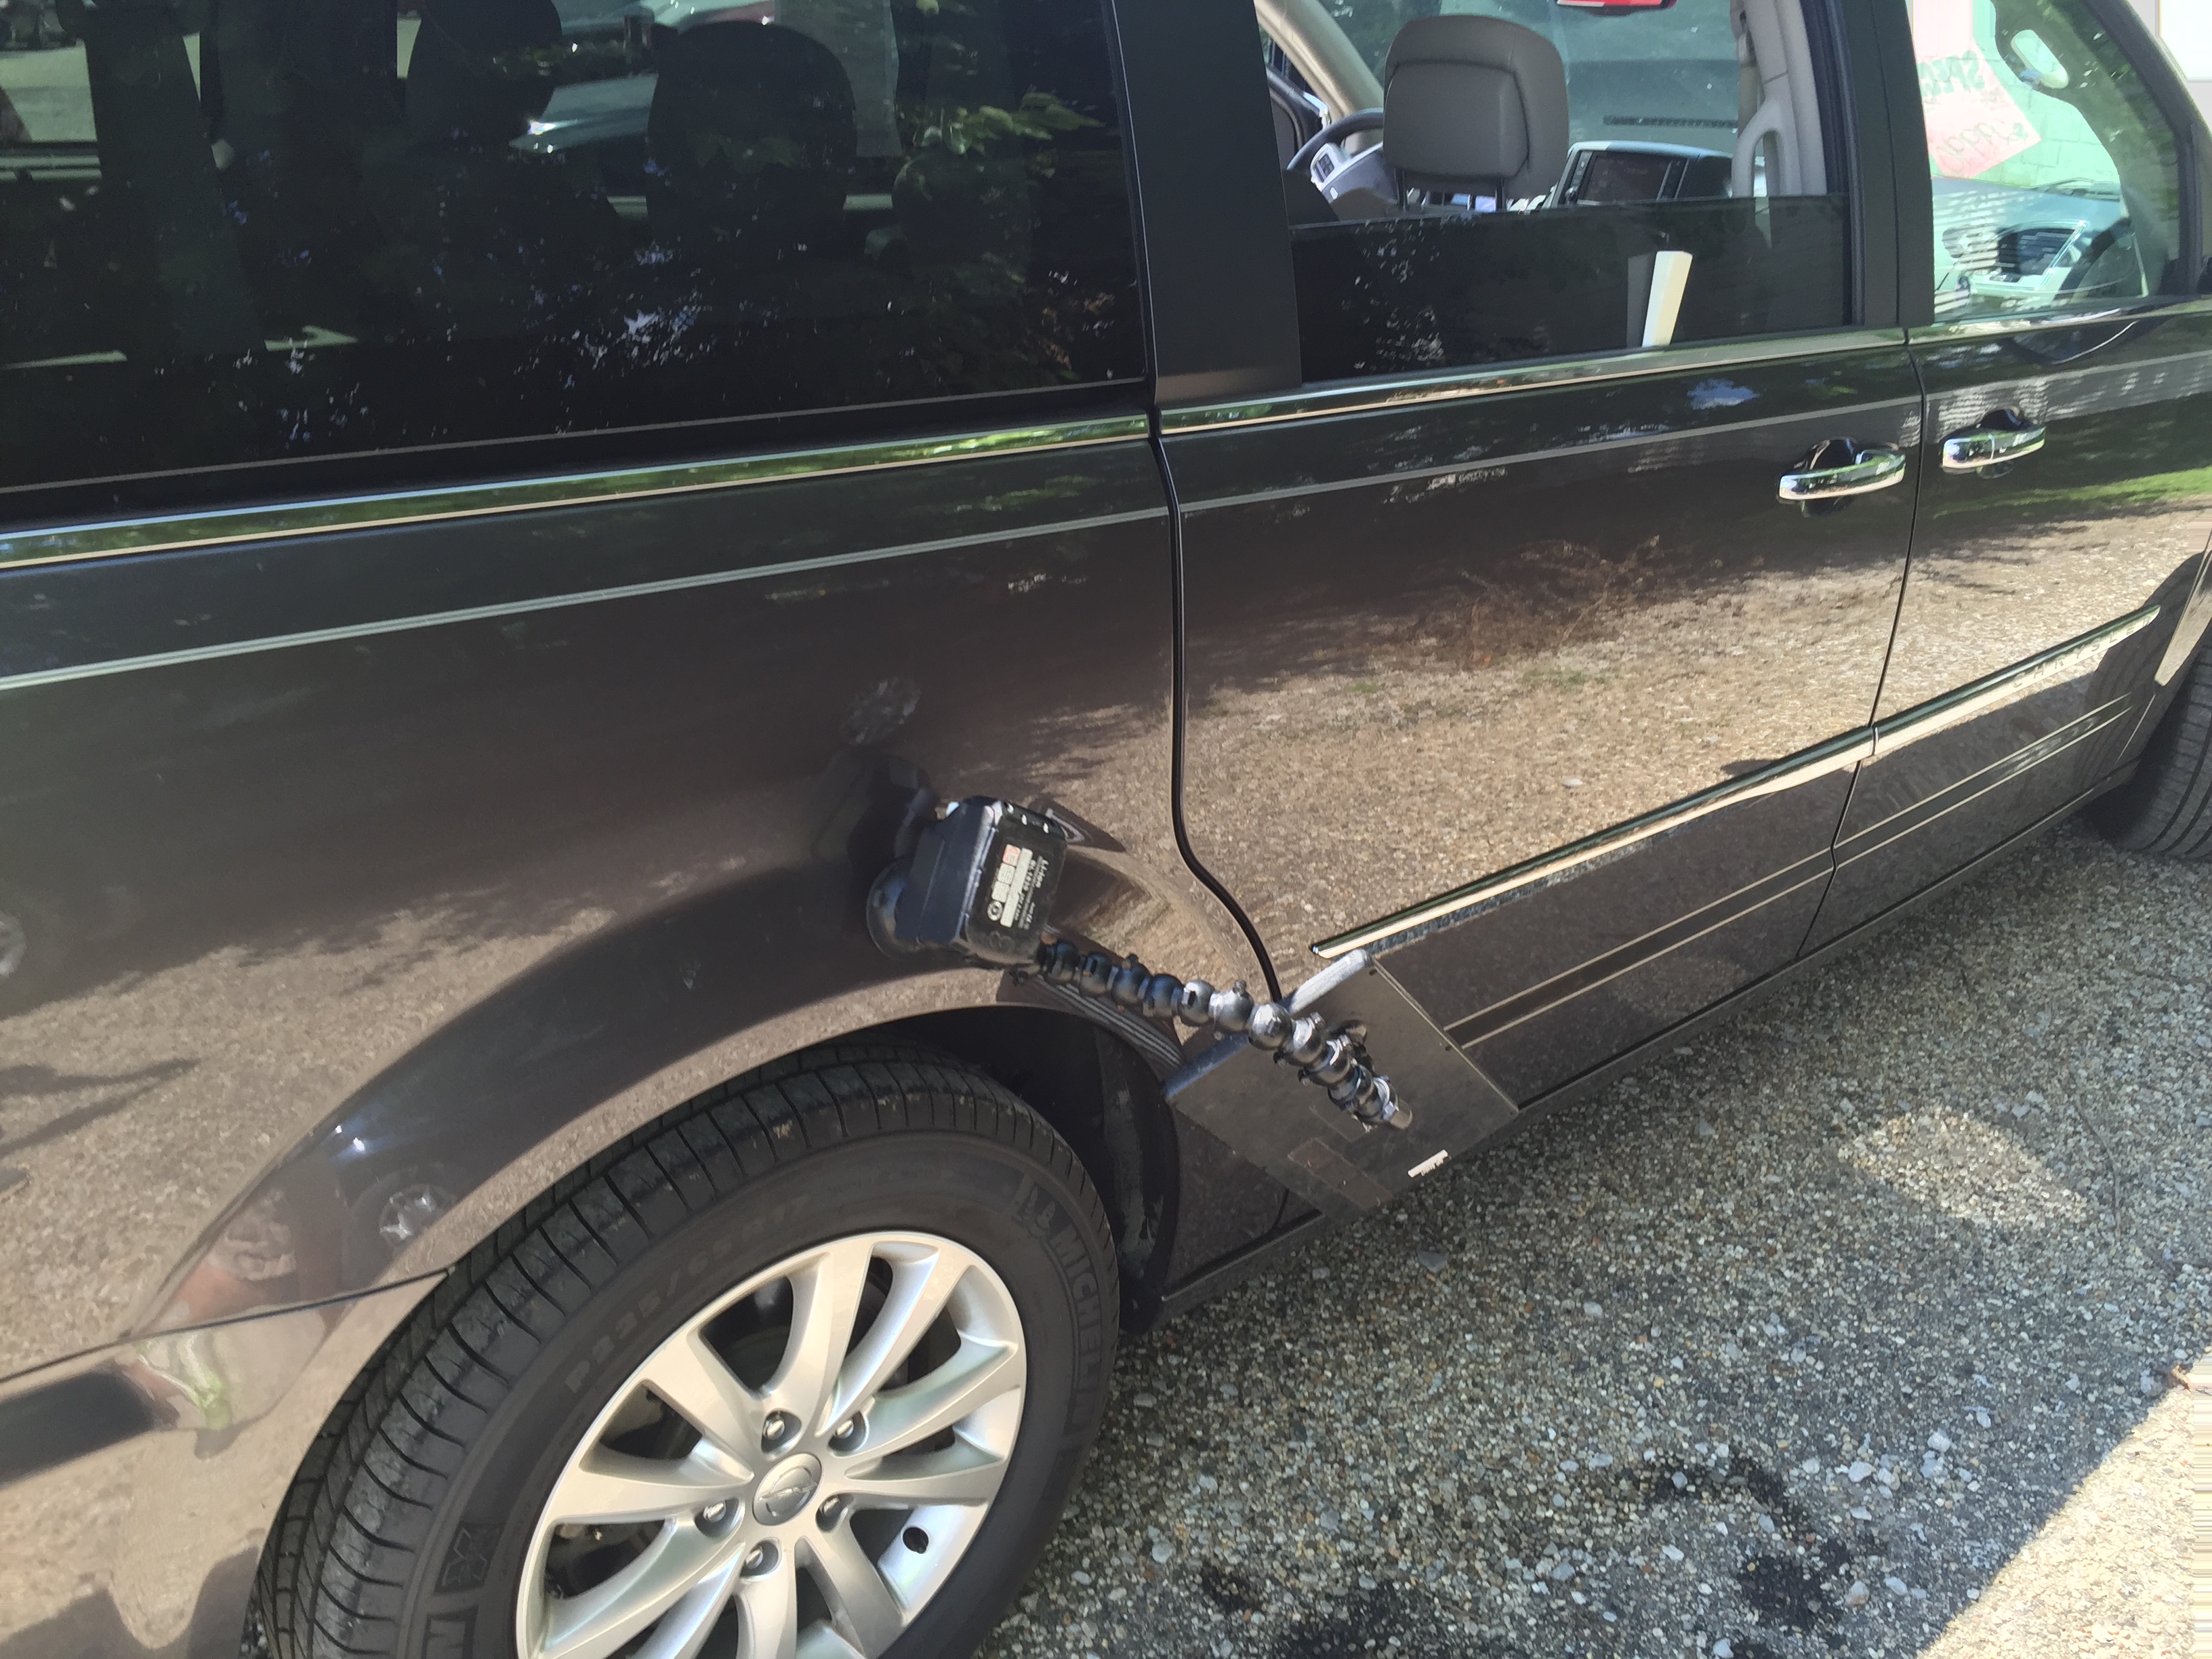 Springfield, IL Dent Repair, 2015 Chrysler Town & Country Sliding door, paintless dent Repair, http://217dent.com